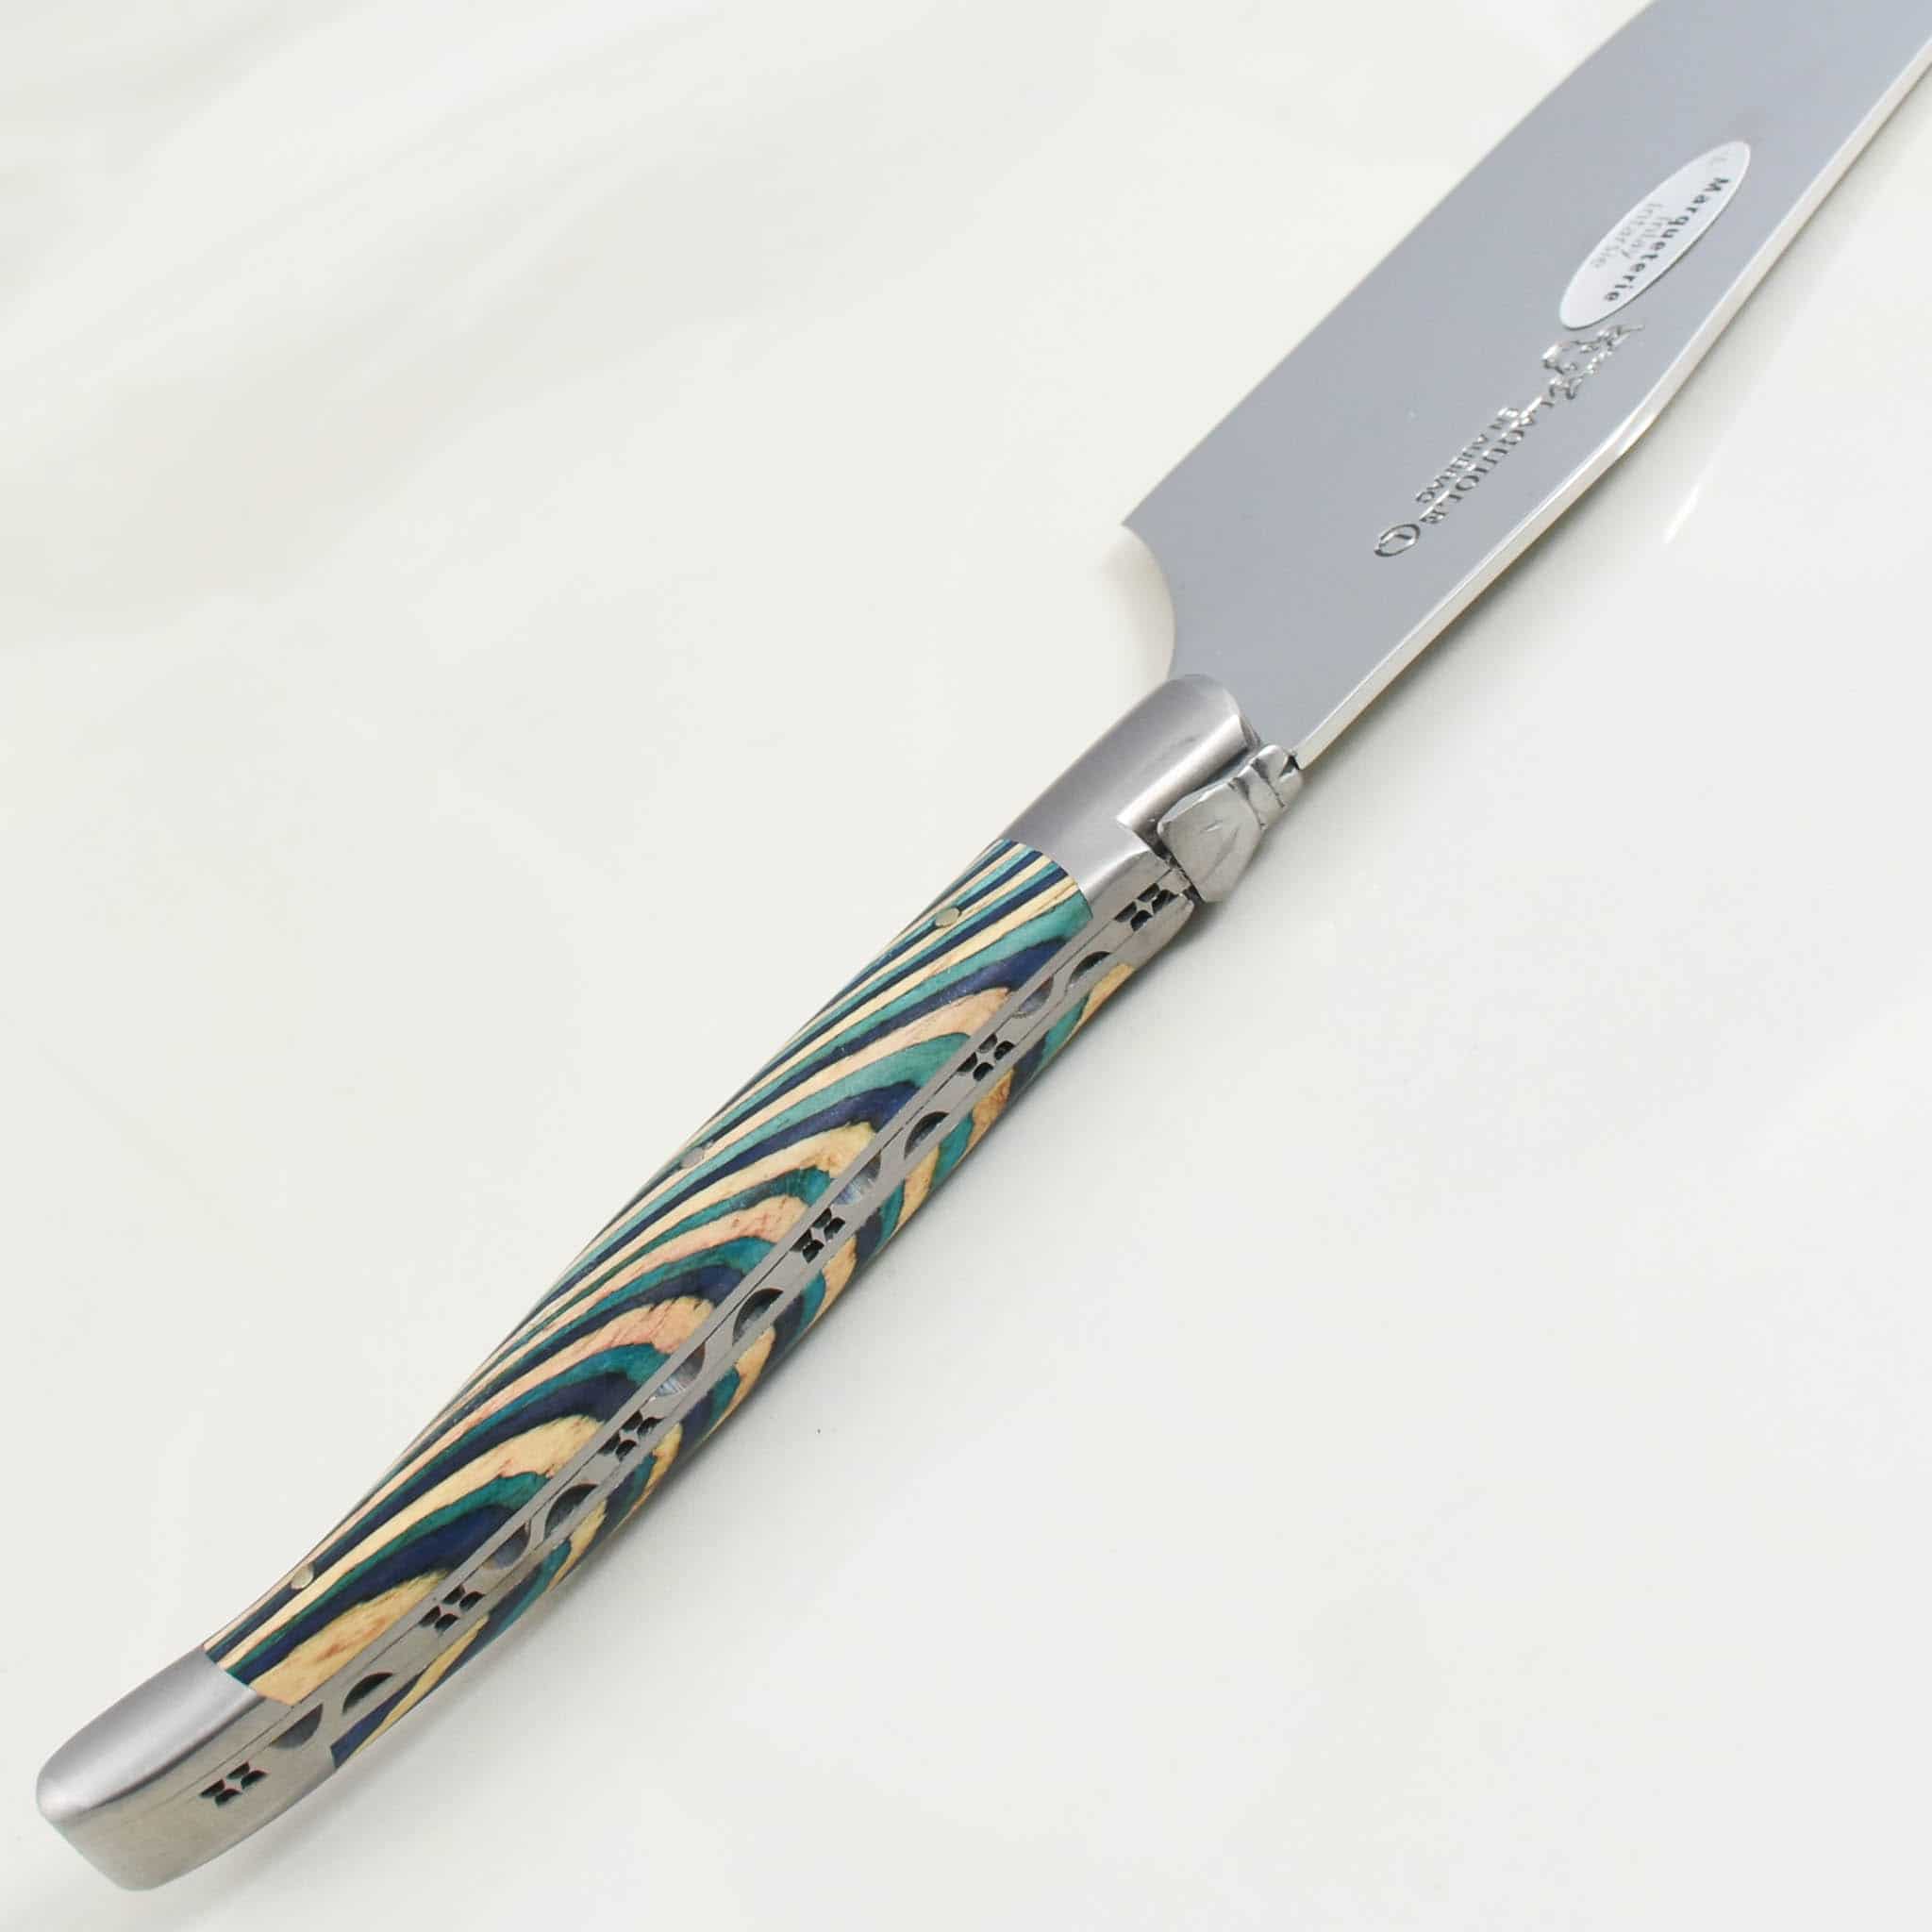 Laguiole en Aubrac Turquoise Hard Cheese Knife, Striped Wood